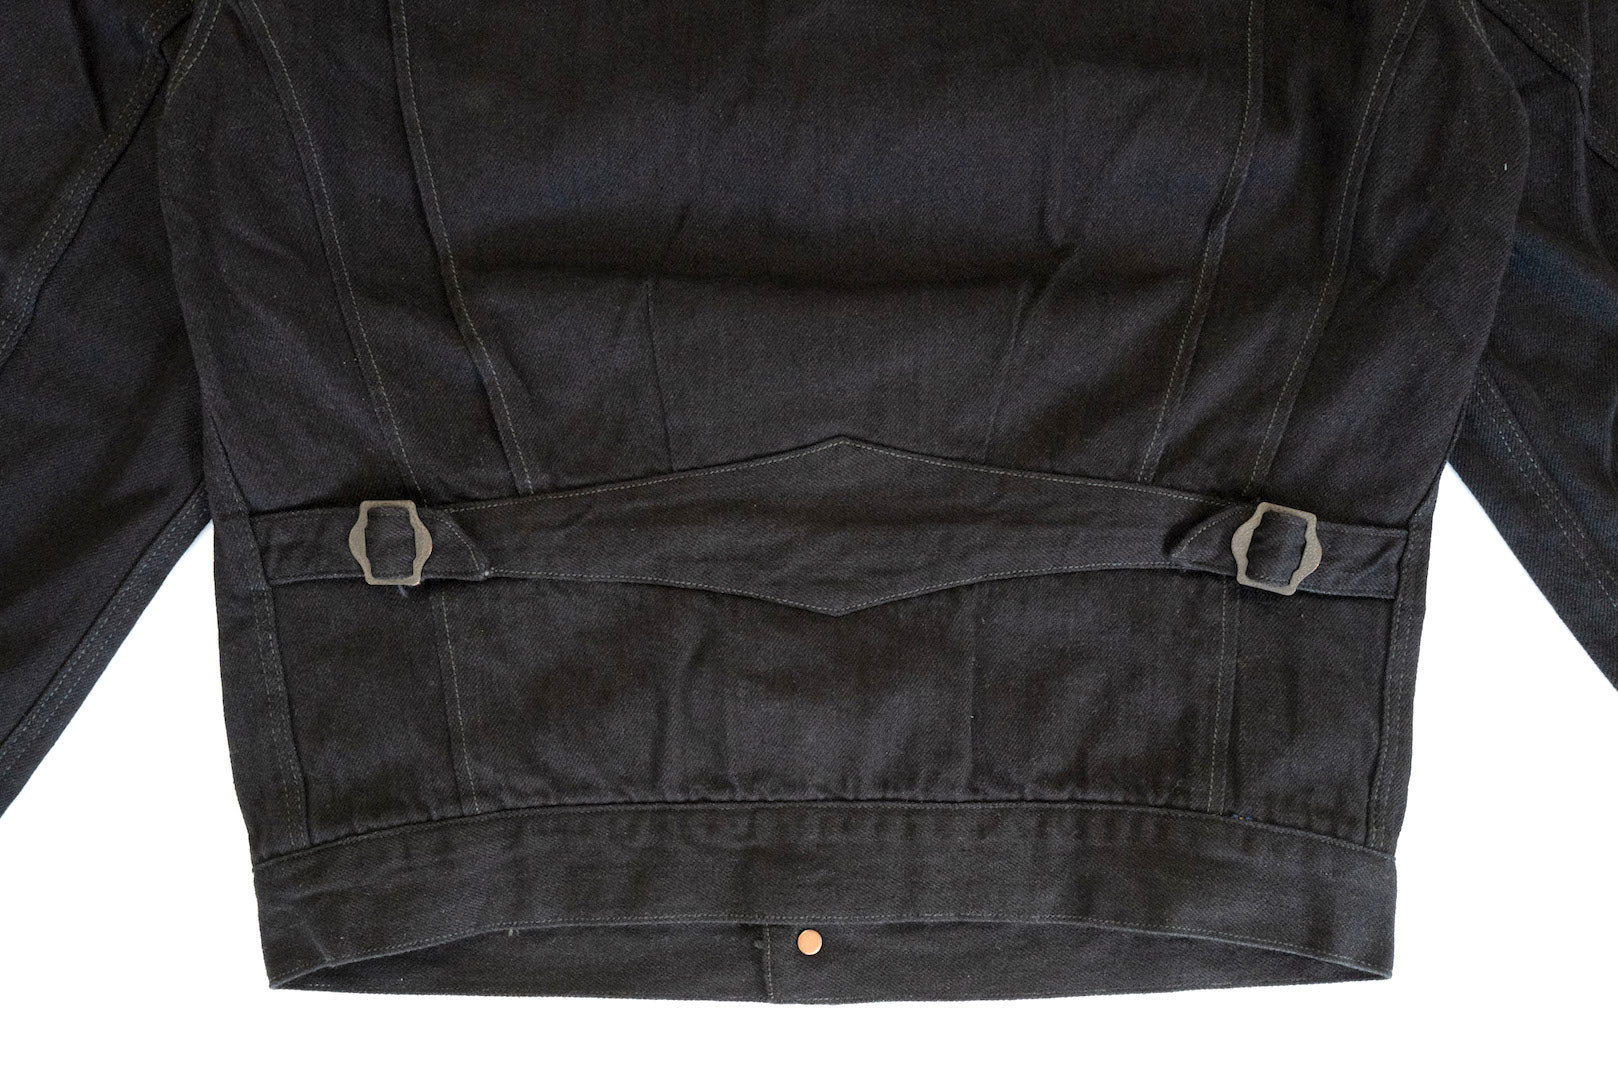 Stevenson Overall Co. 'Stockman' Cowboy Denim Jacket (Black)